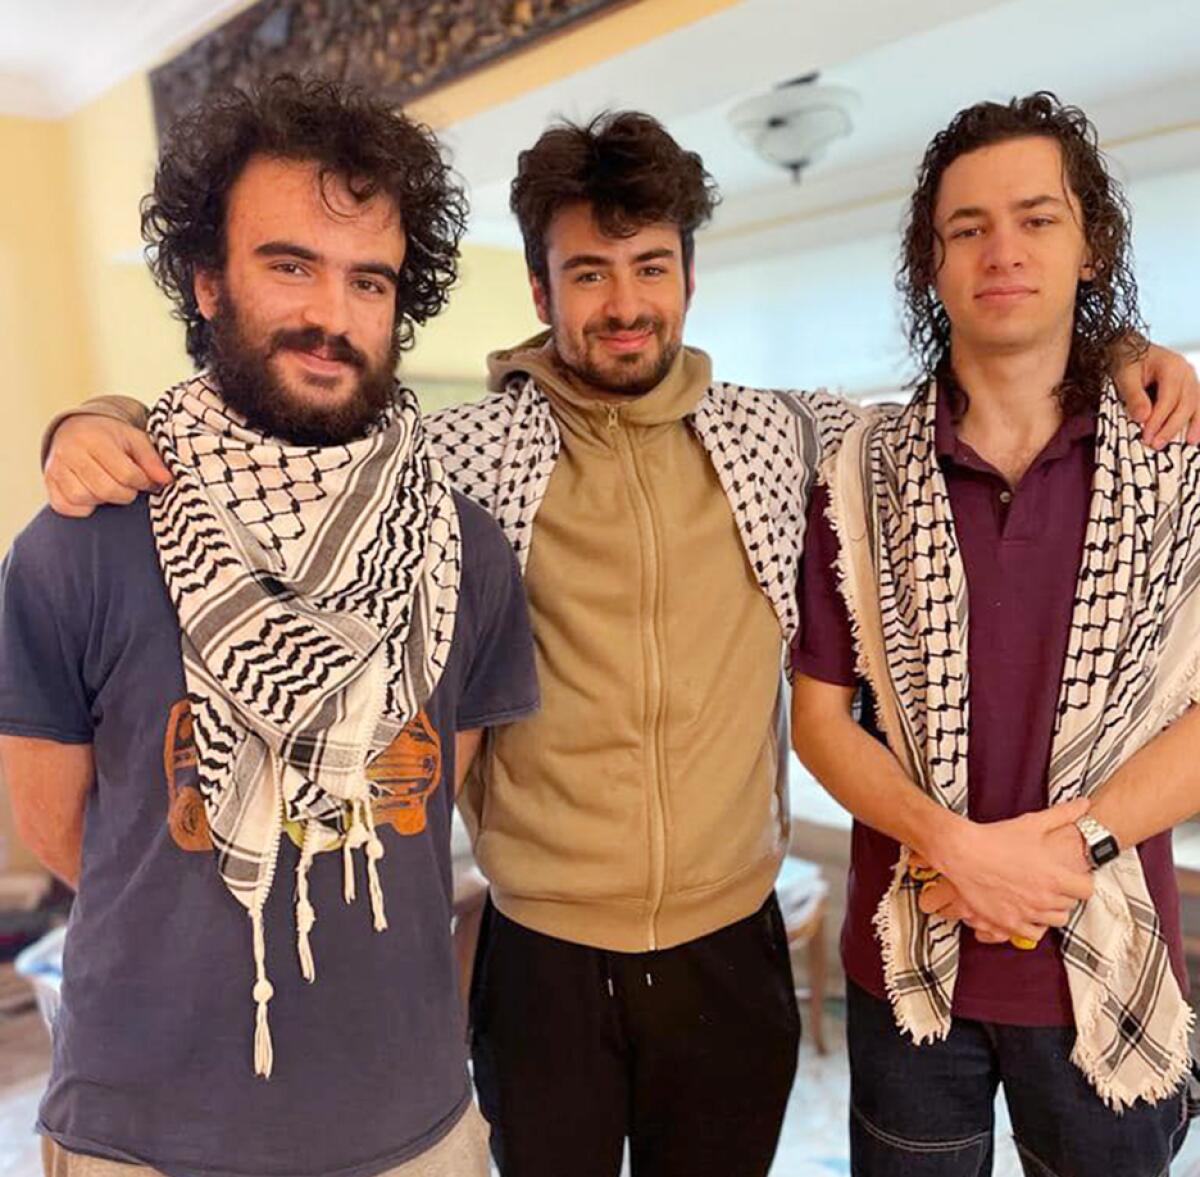 Three Palestinian college students smile wearing black and white keffiyehs.